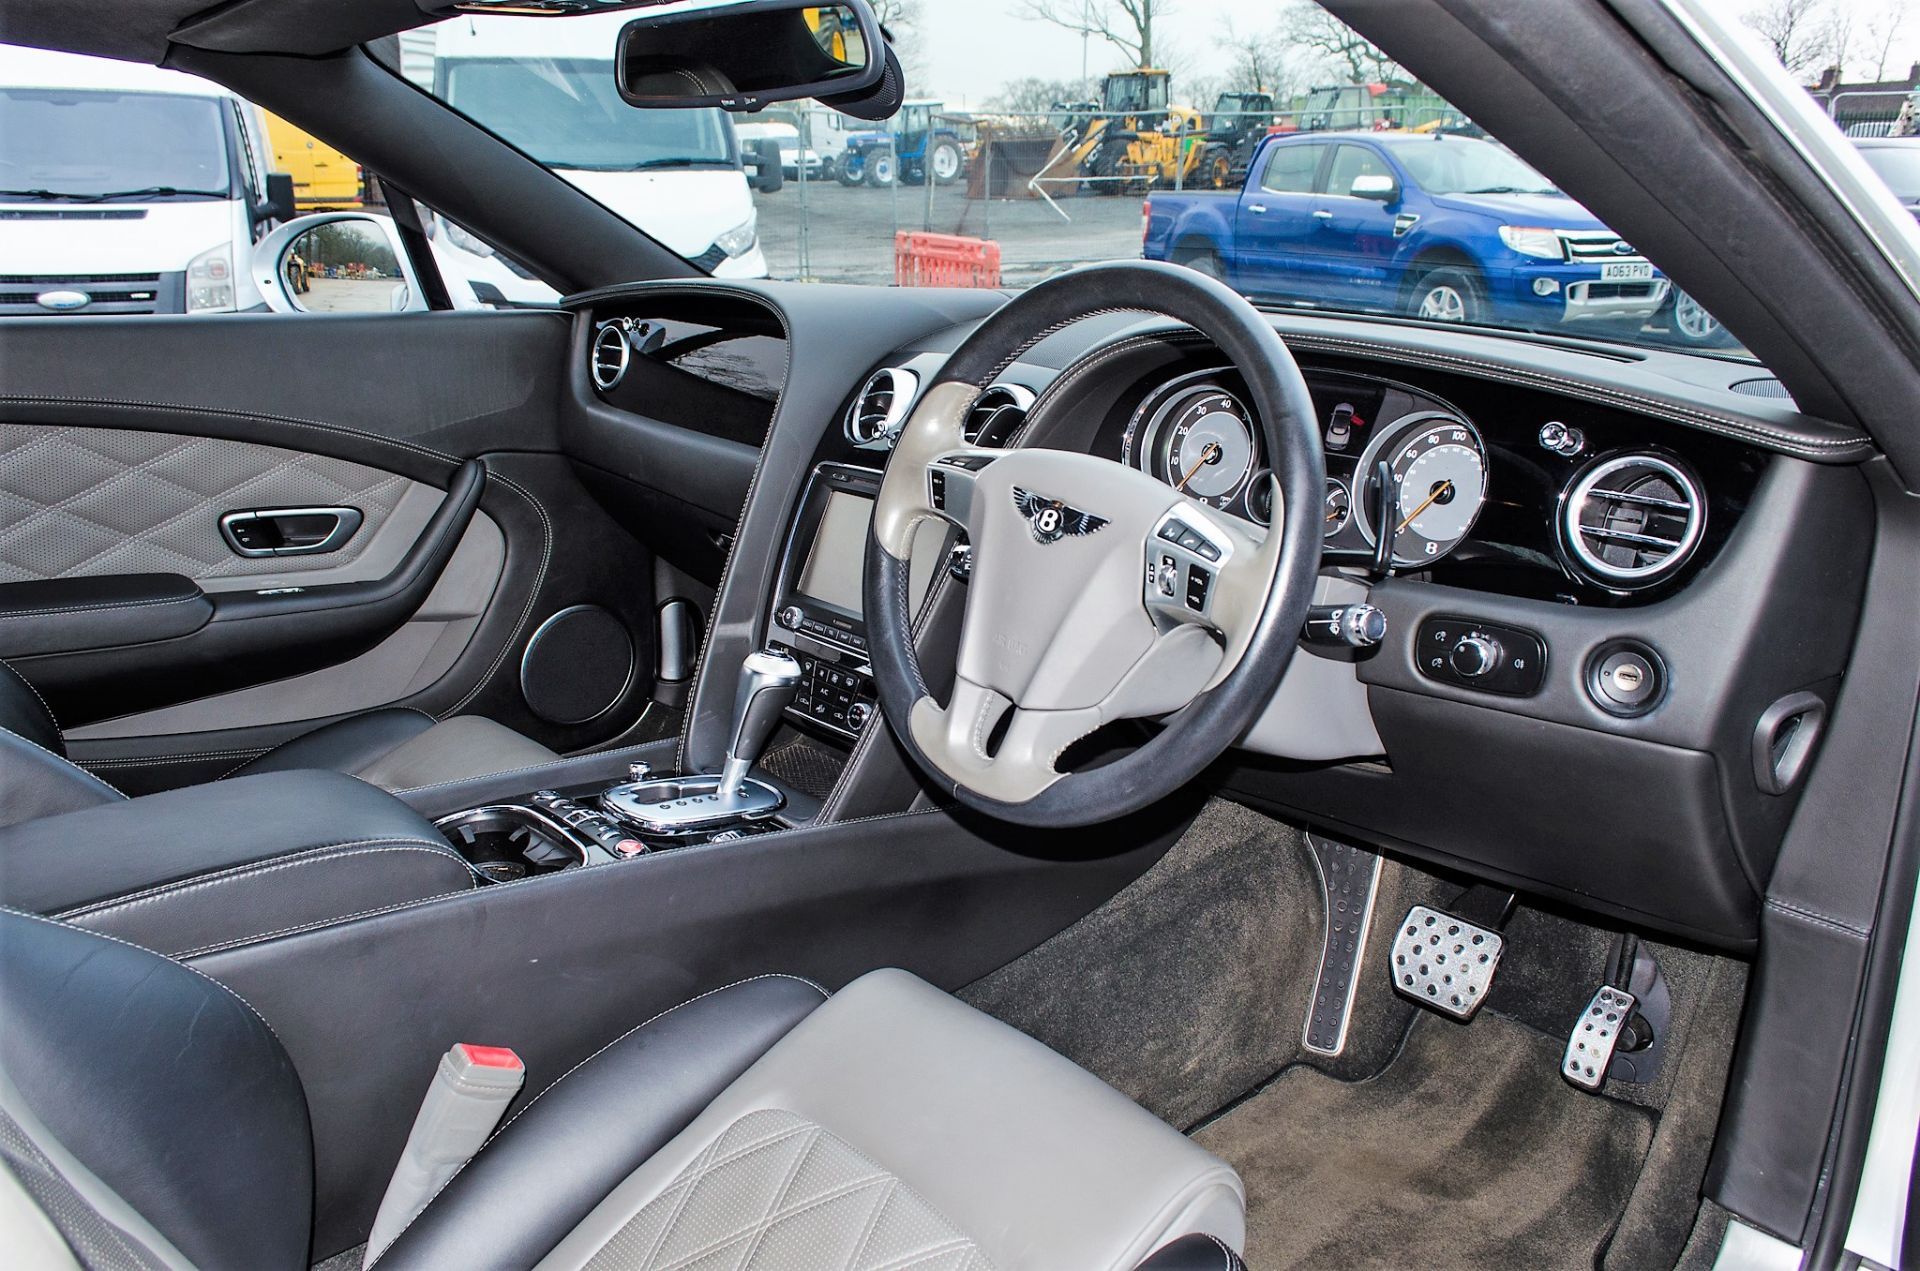 Bentley Continental GTC 4.0 V8 2 door convertible Reg No: RCS 88 (reg number will be retained) - Image 25 of 51